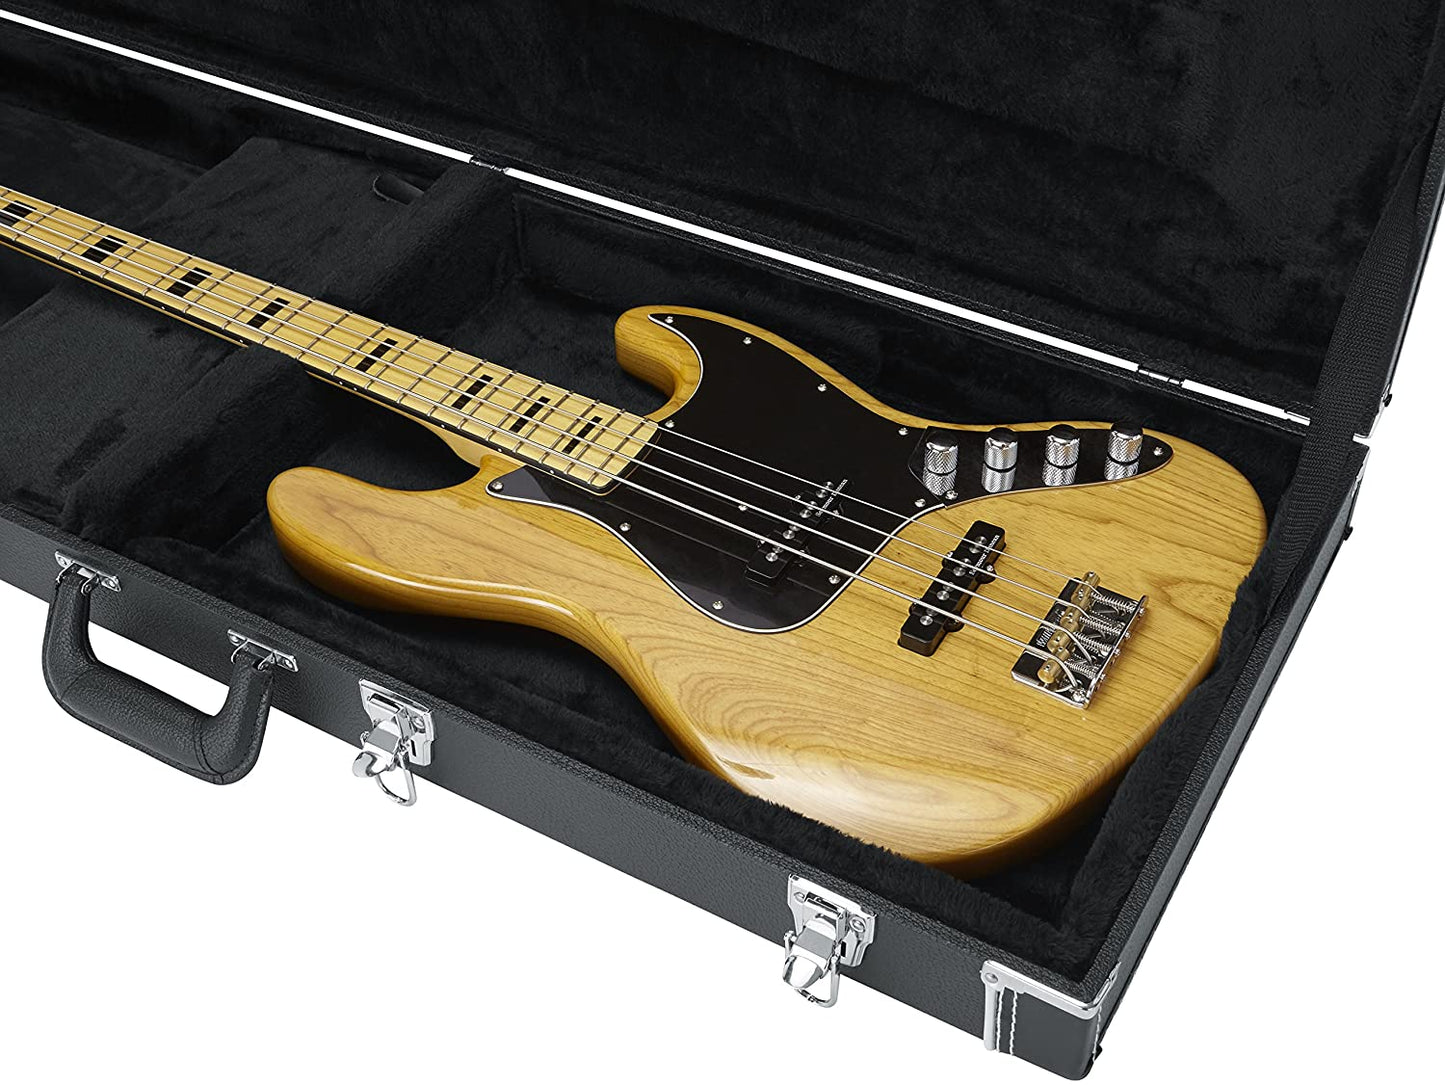 Gator GW-BASS Deluxe Wood and Tolex Bass Case